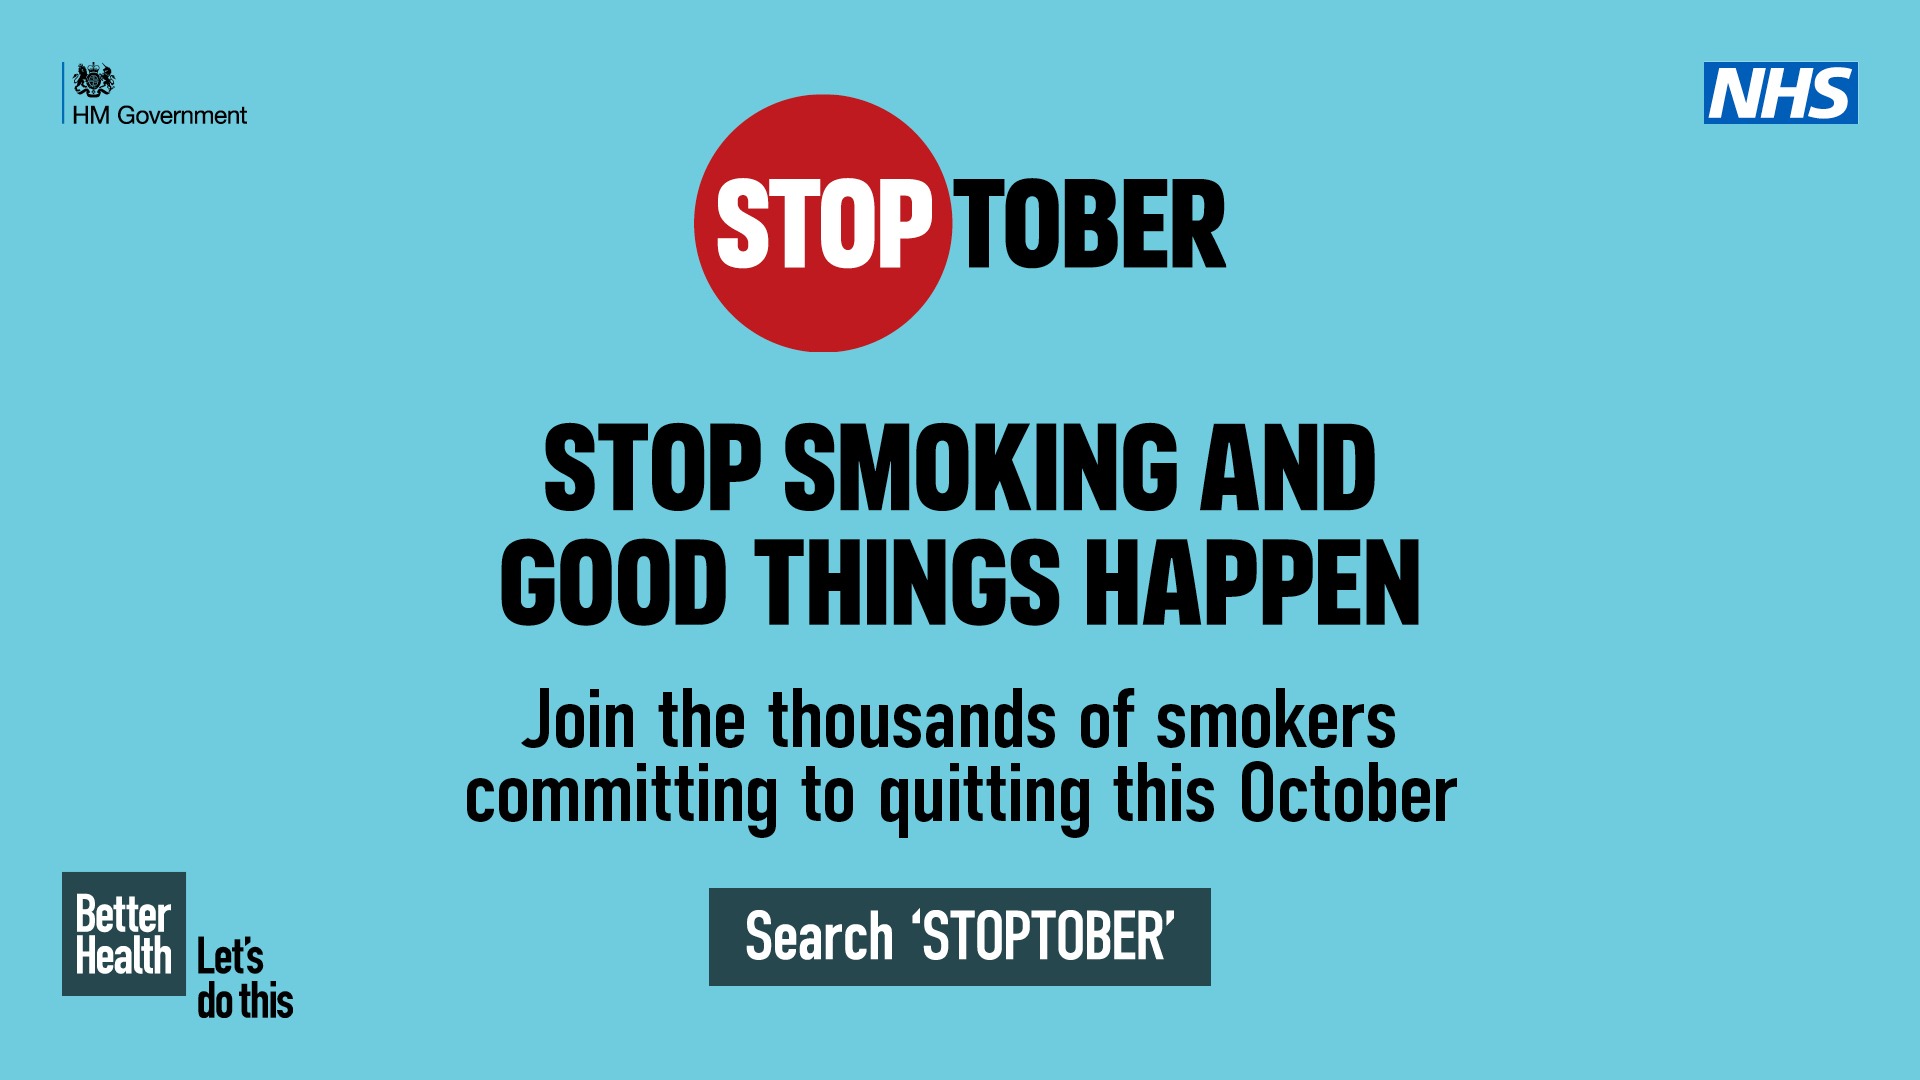 Stoptober image - stop smoking and good things happen